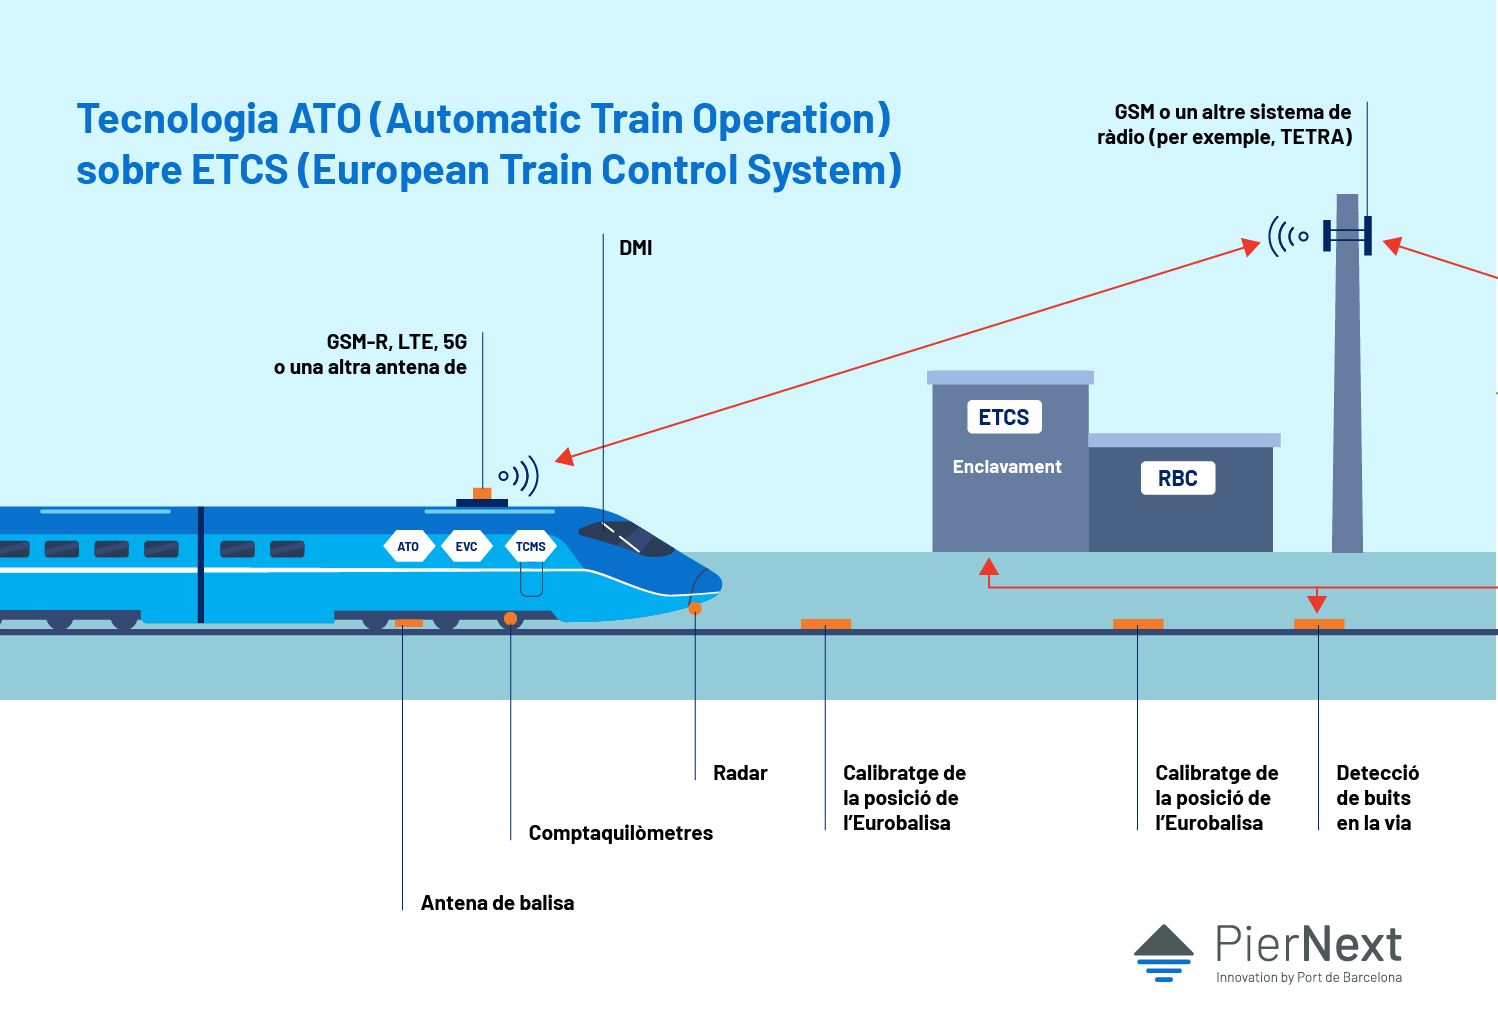 Font: Siemens: 'How digitalization is transforming rail infrastructure'/PierNext